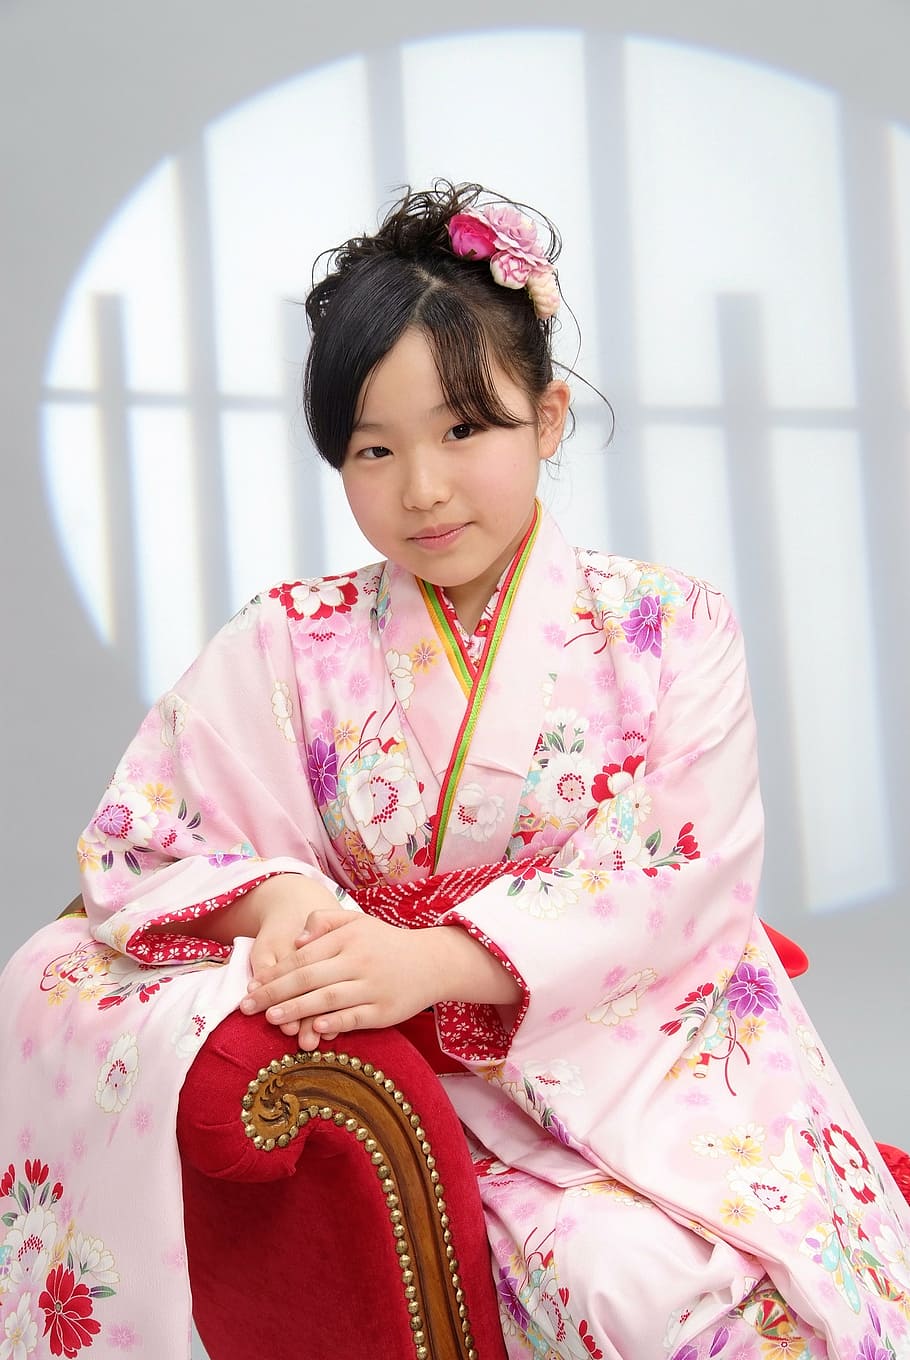 n, o, k, kimono, japan, japanese Culture, japanese Ethnicity, women, people, traditional Clothing